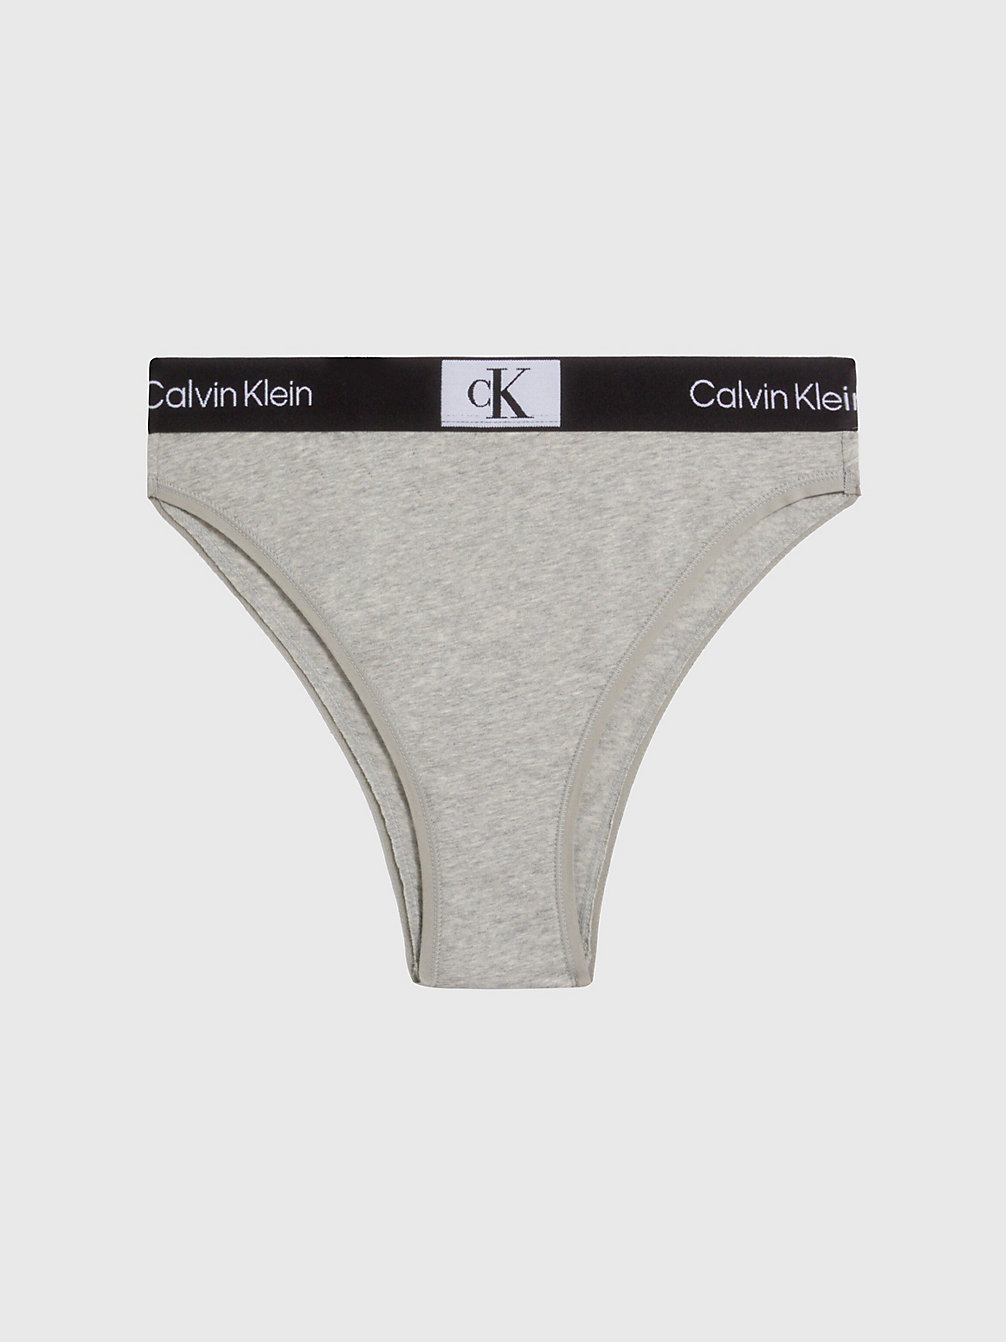 GREY HEATHER High Waisted Brazilian Briefs - Ck96 undefined women Calvin Klein